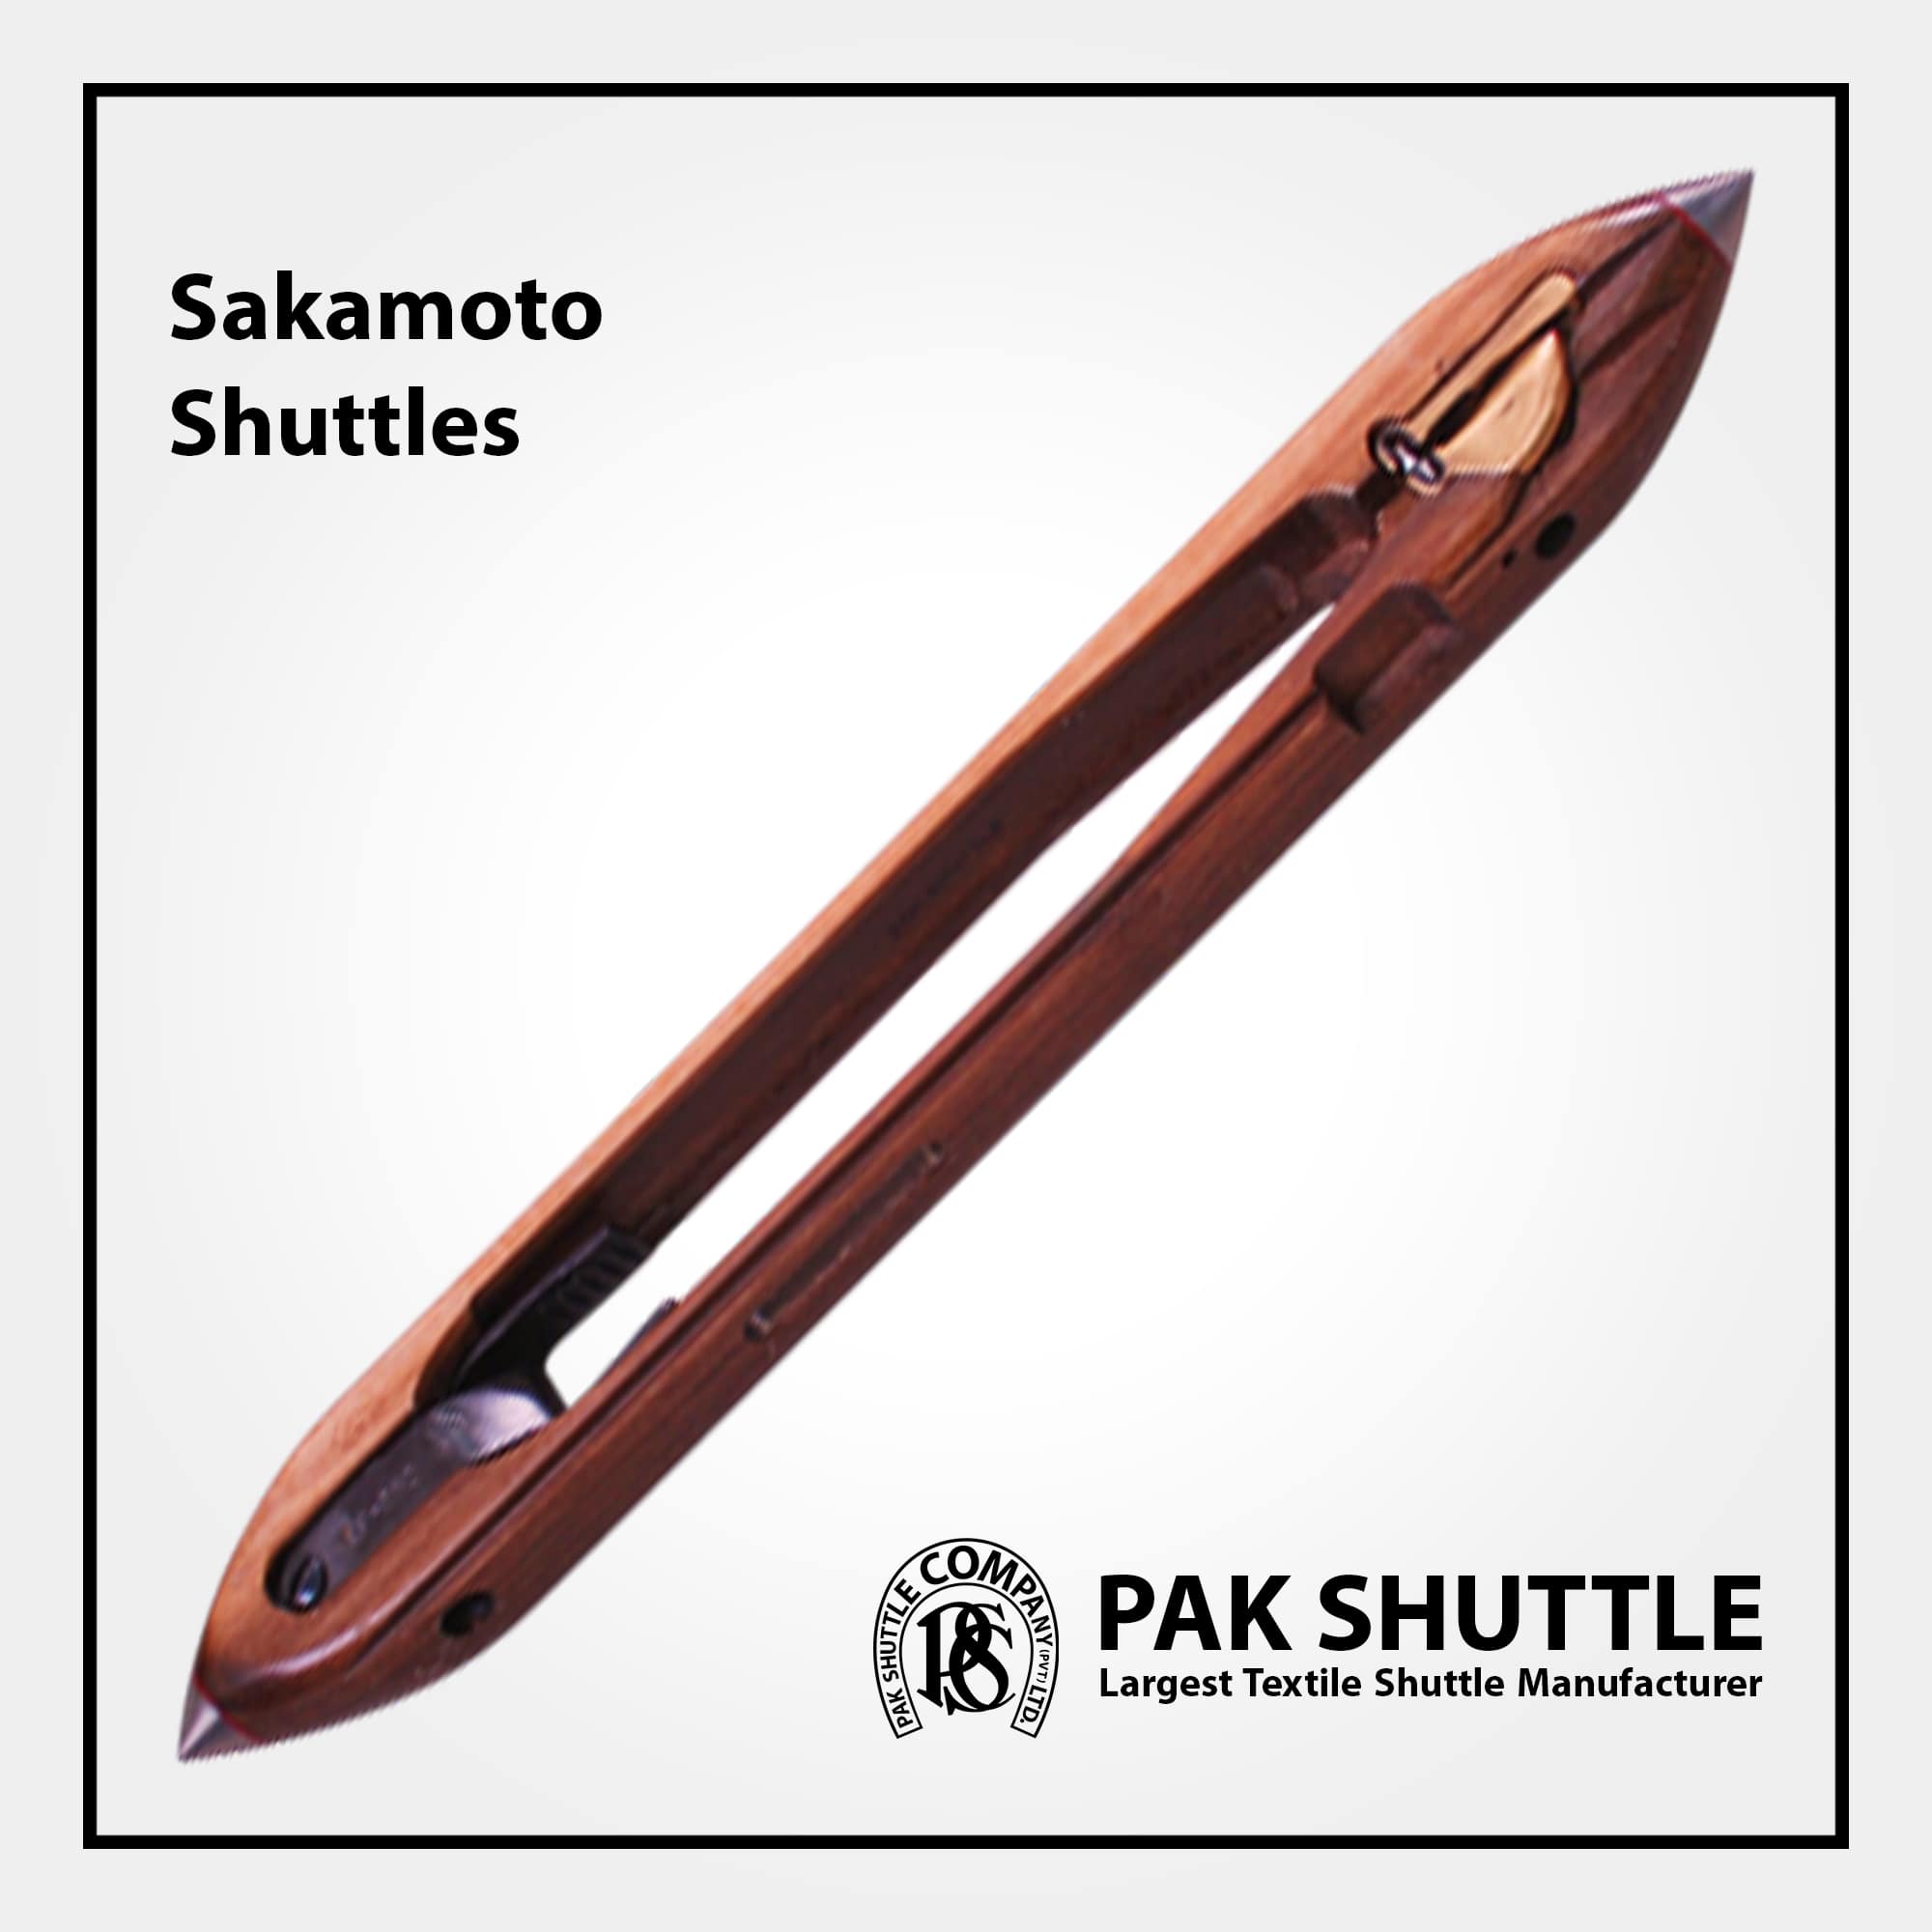 Sakamoto Shuttle by Pak Shuttle Company Pvt Ltd.